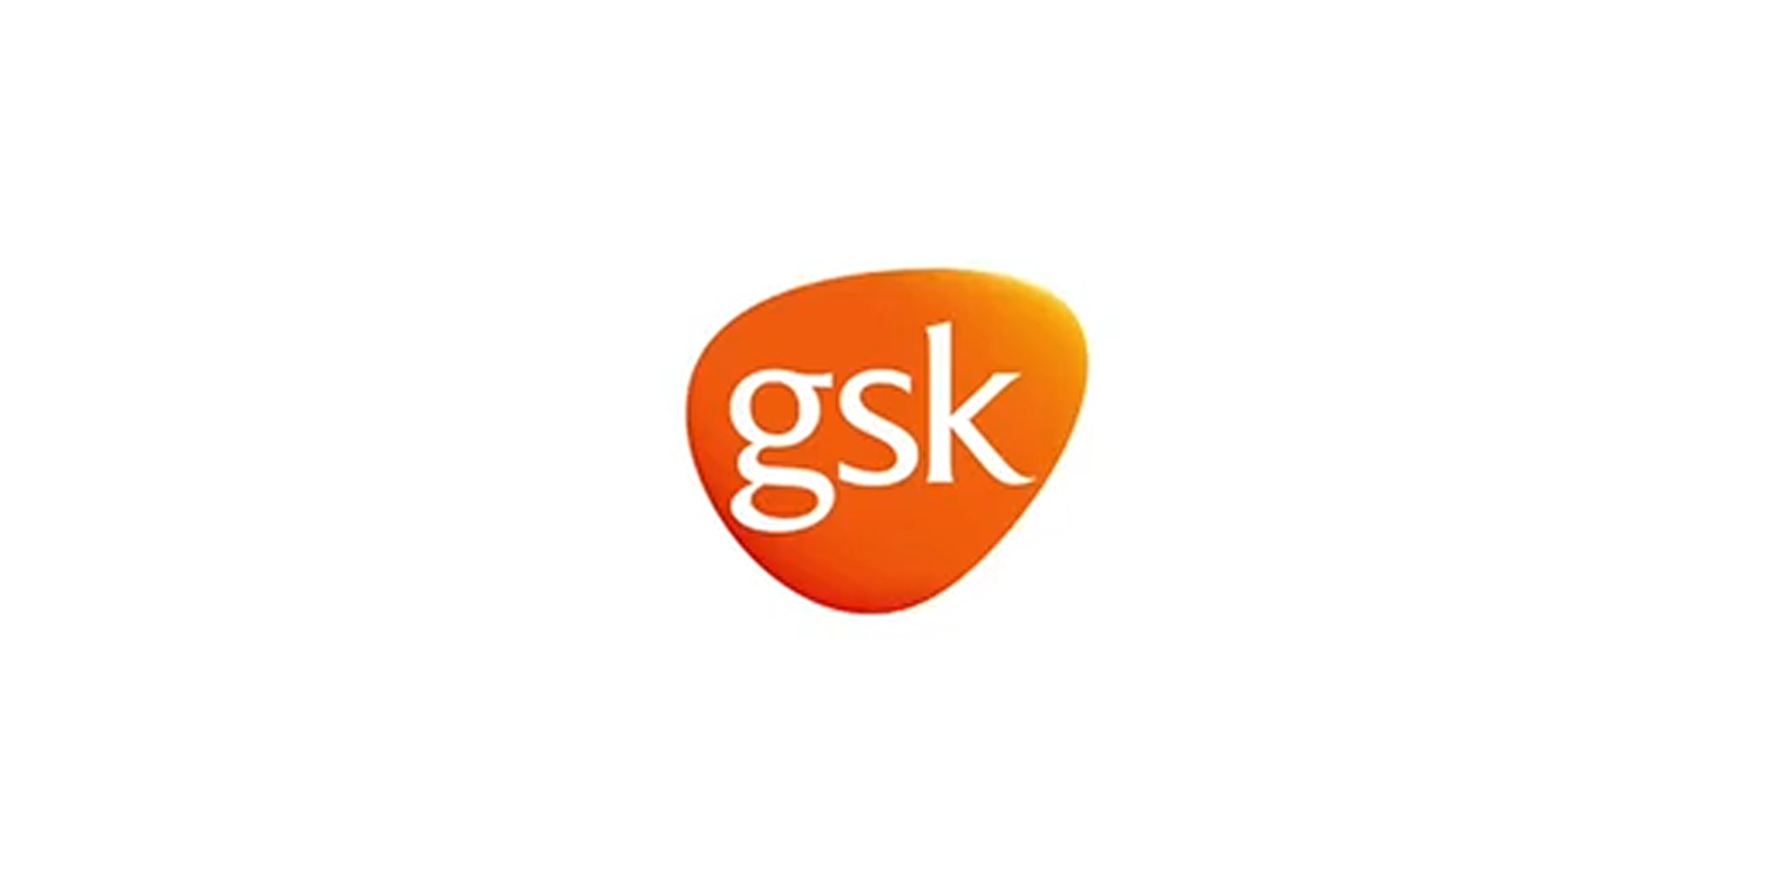 Gsk 980. GSK логотип. GSK фармацевтическая компания логотип. ГЛАКСОСМИТКЛЯЙН Хелскер. GLAXOSMITHKLINE (GSK) PLC.